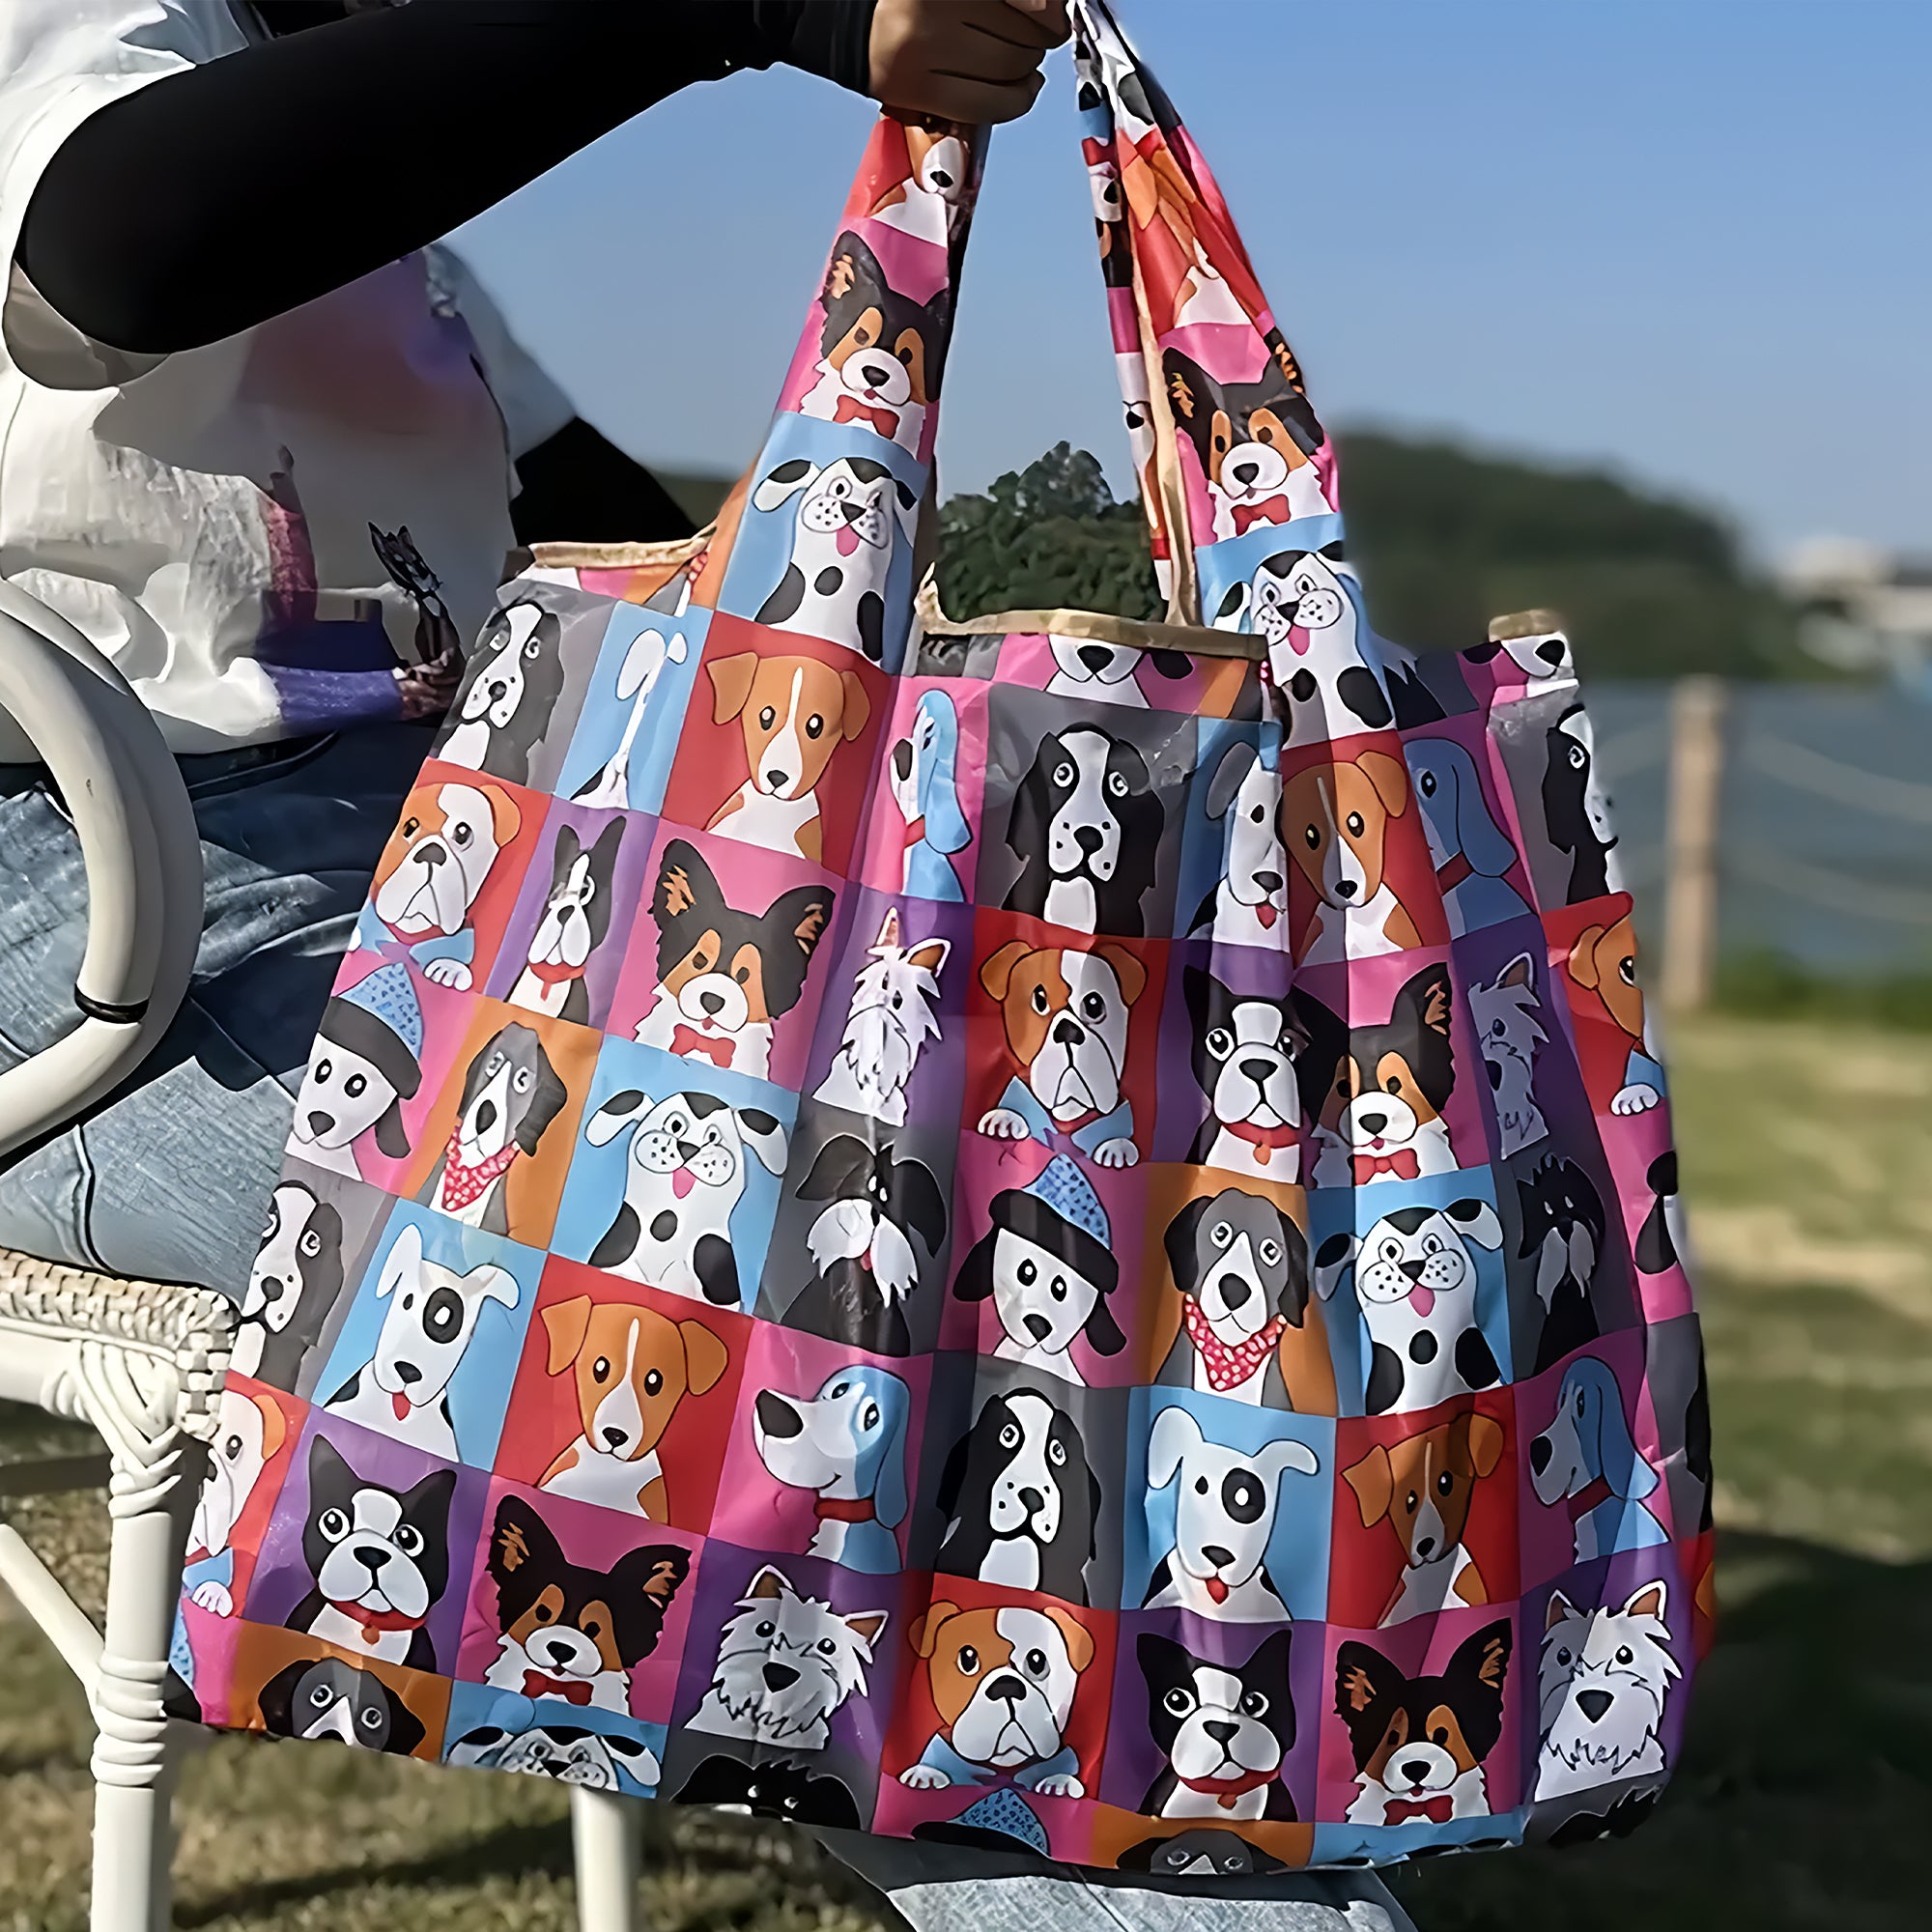 Environmentally Friendly Bag - Cute Cartoon Grocery Bags